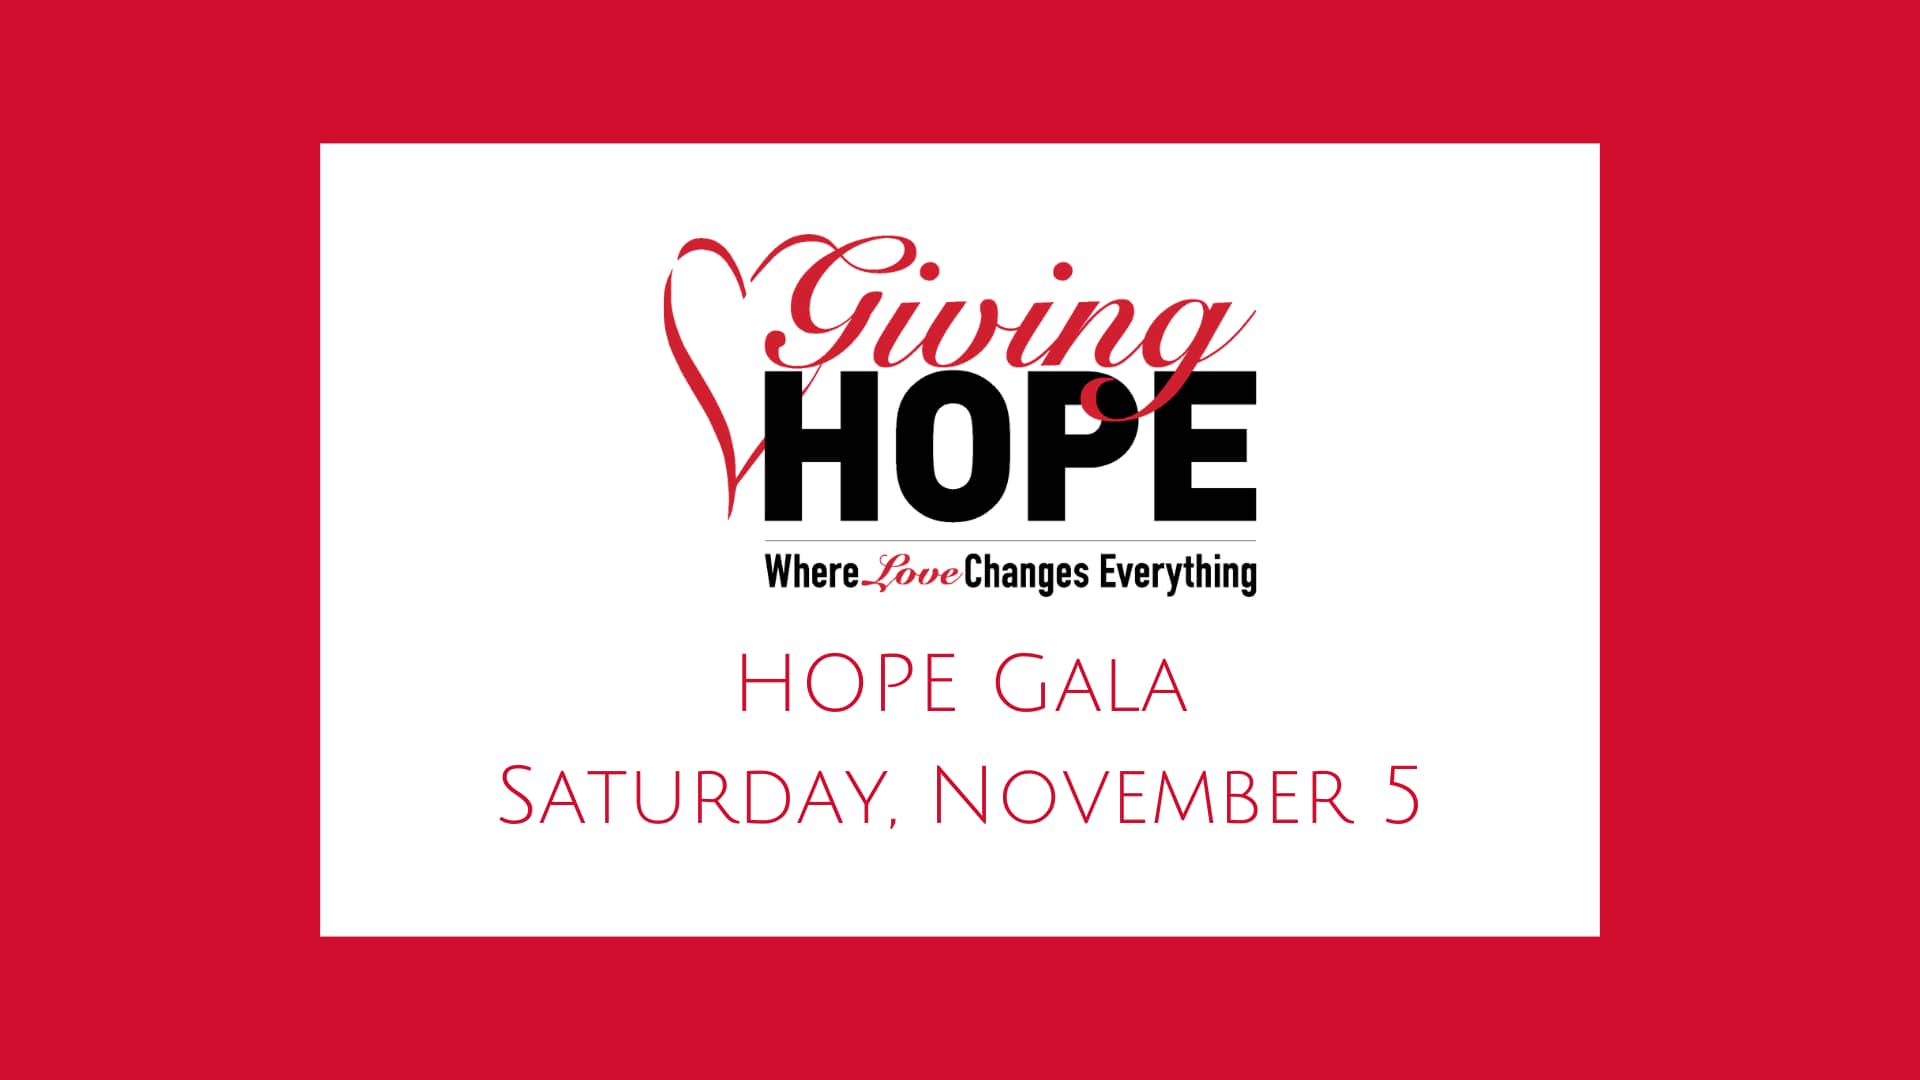 Giving Hope Gala PSA.mp4 on Vimeo